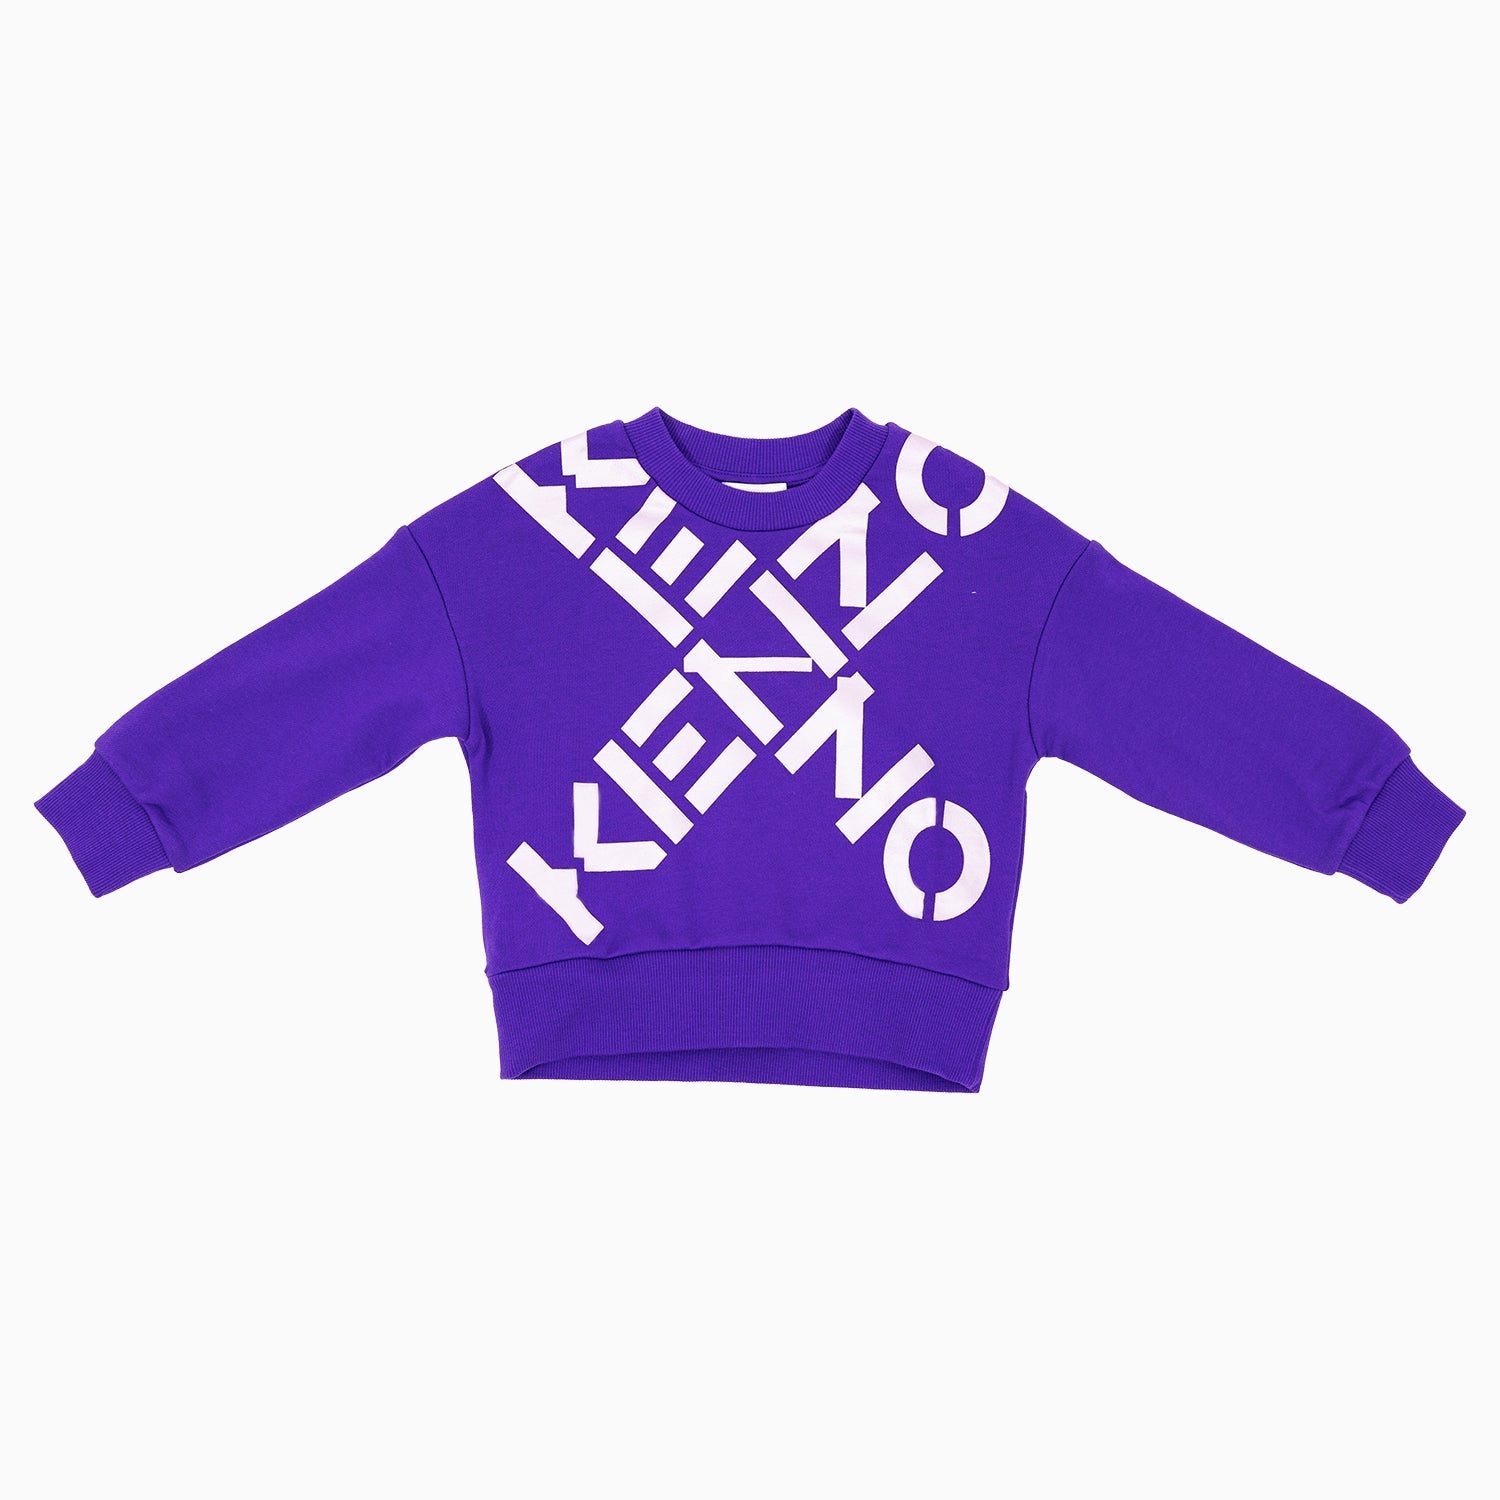 Kenzo Kid's Maxi Cross Sweatshirt - Color: Plum - Kids Premium Clothing -